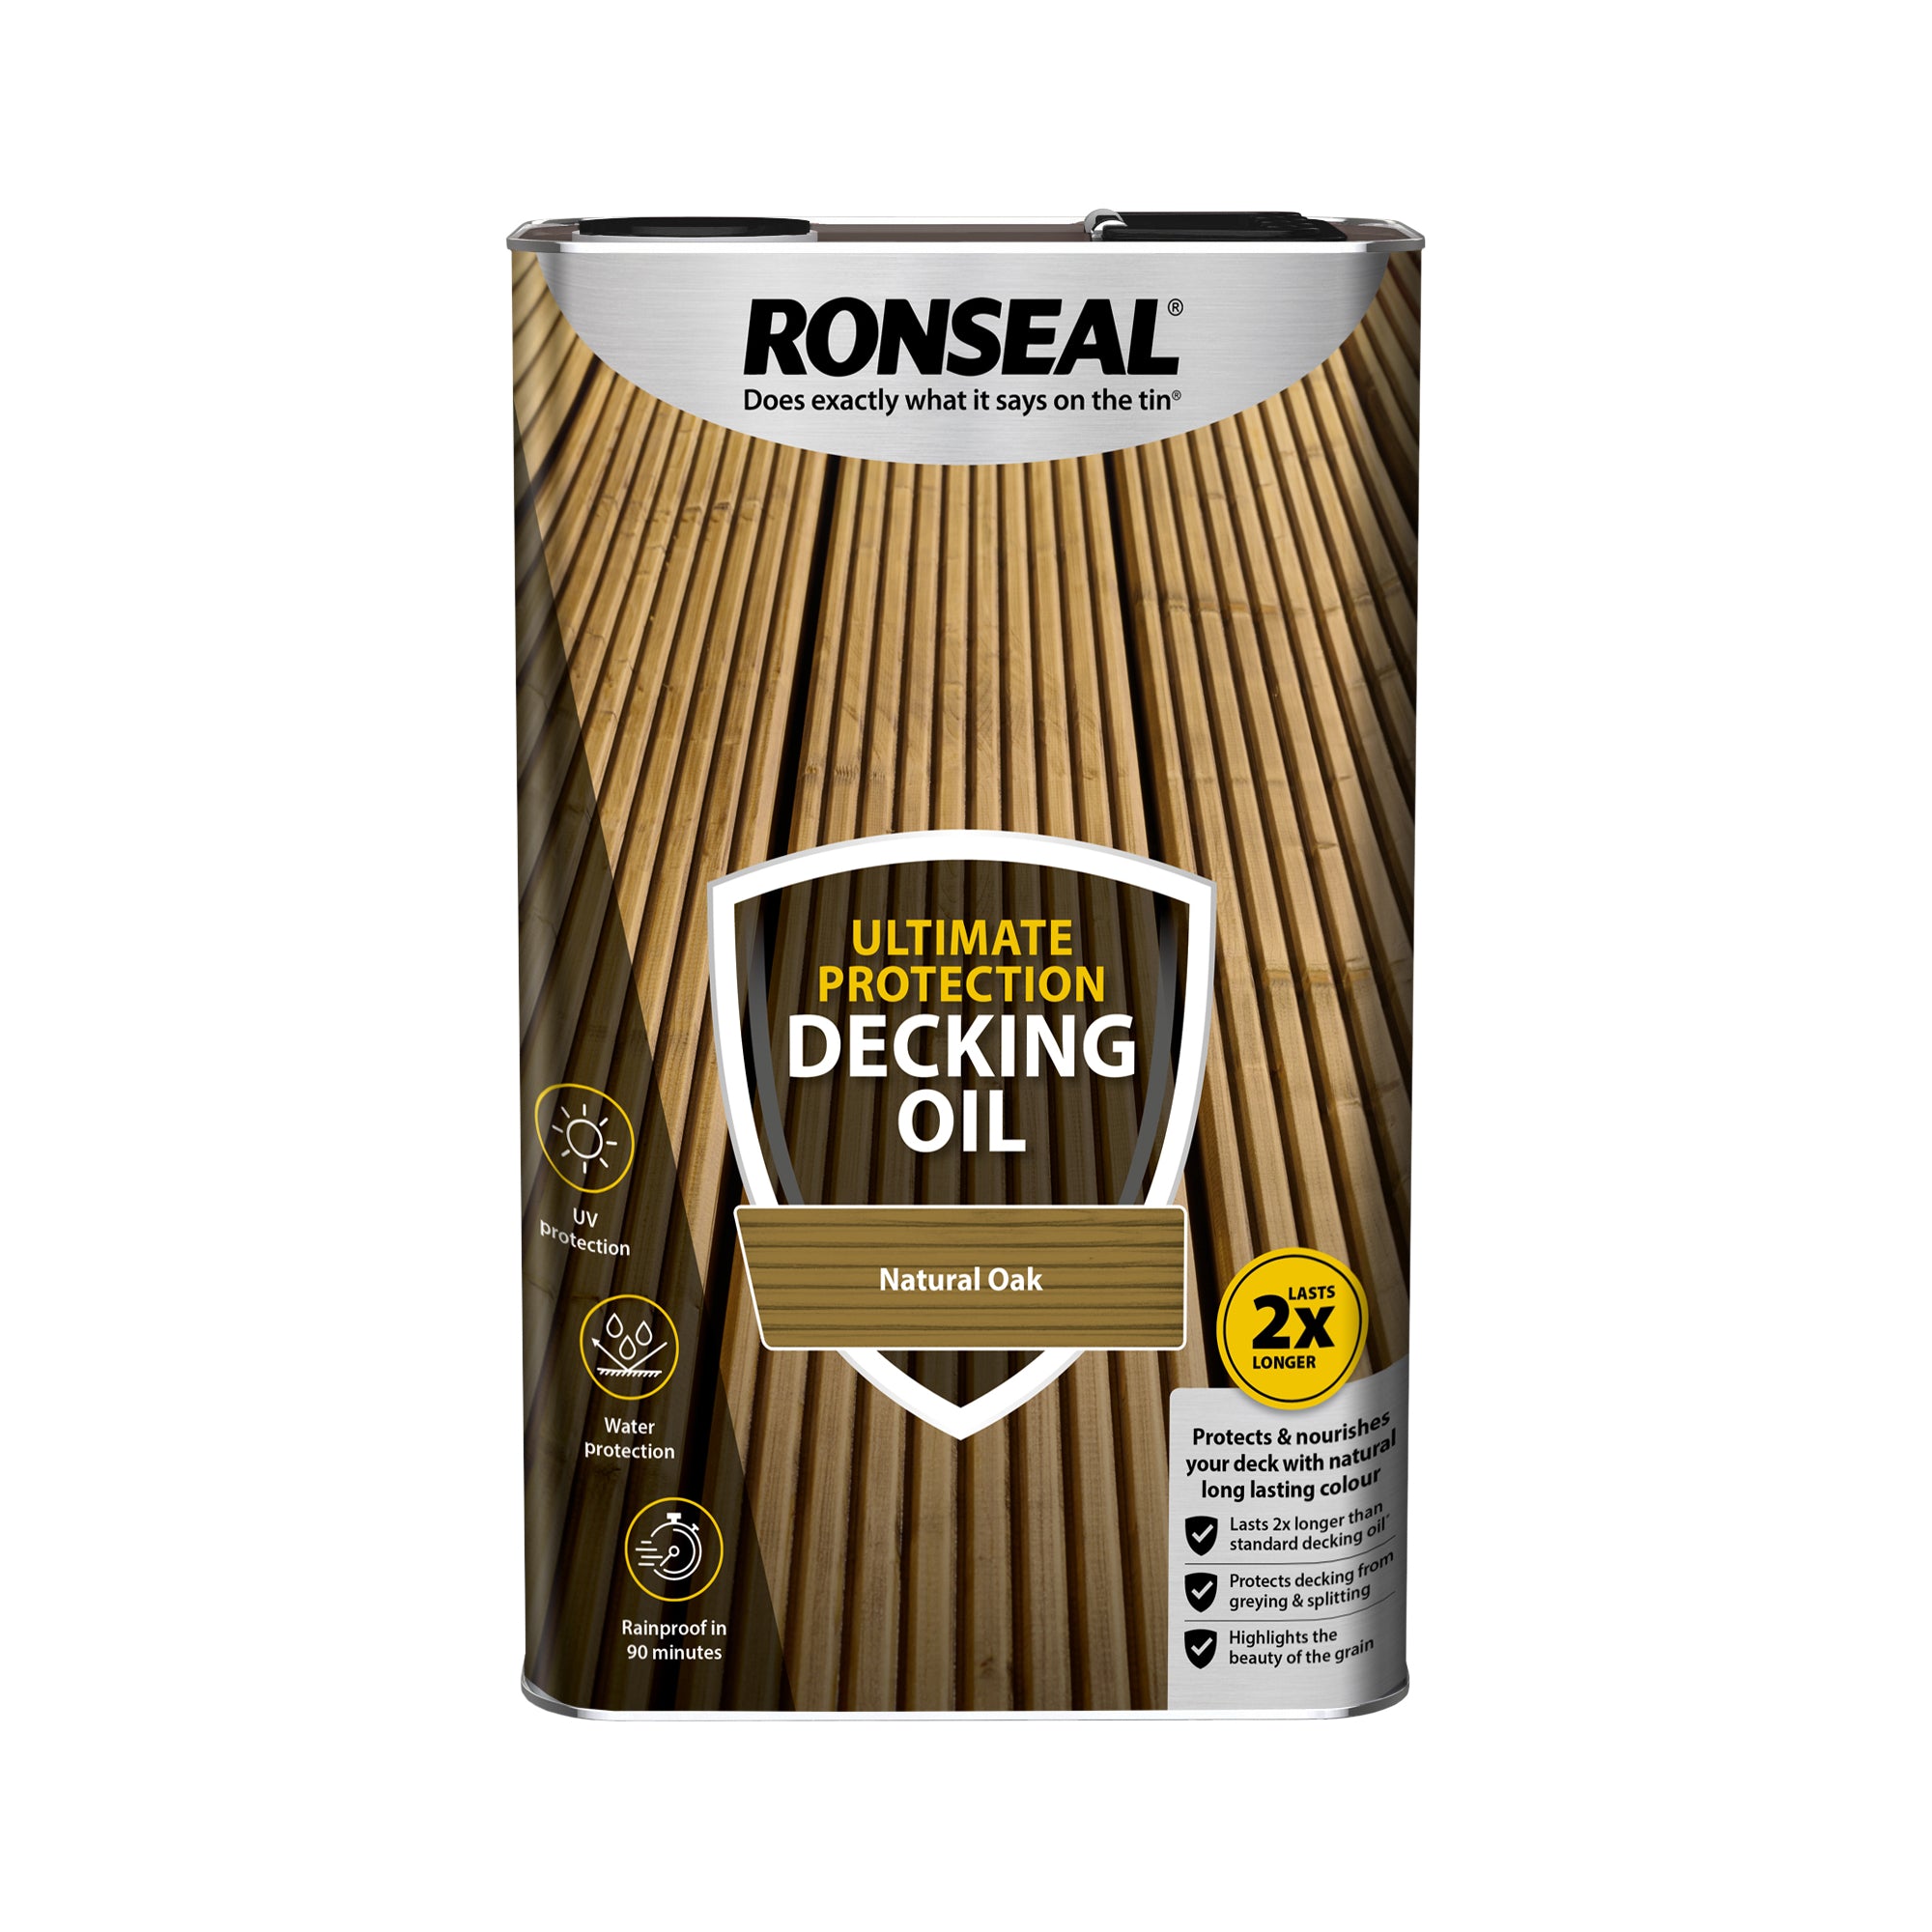 Ronseal-Ultimate-Protection-Decking-Oil-Natural-Oak-5L